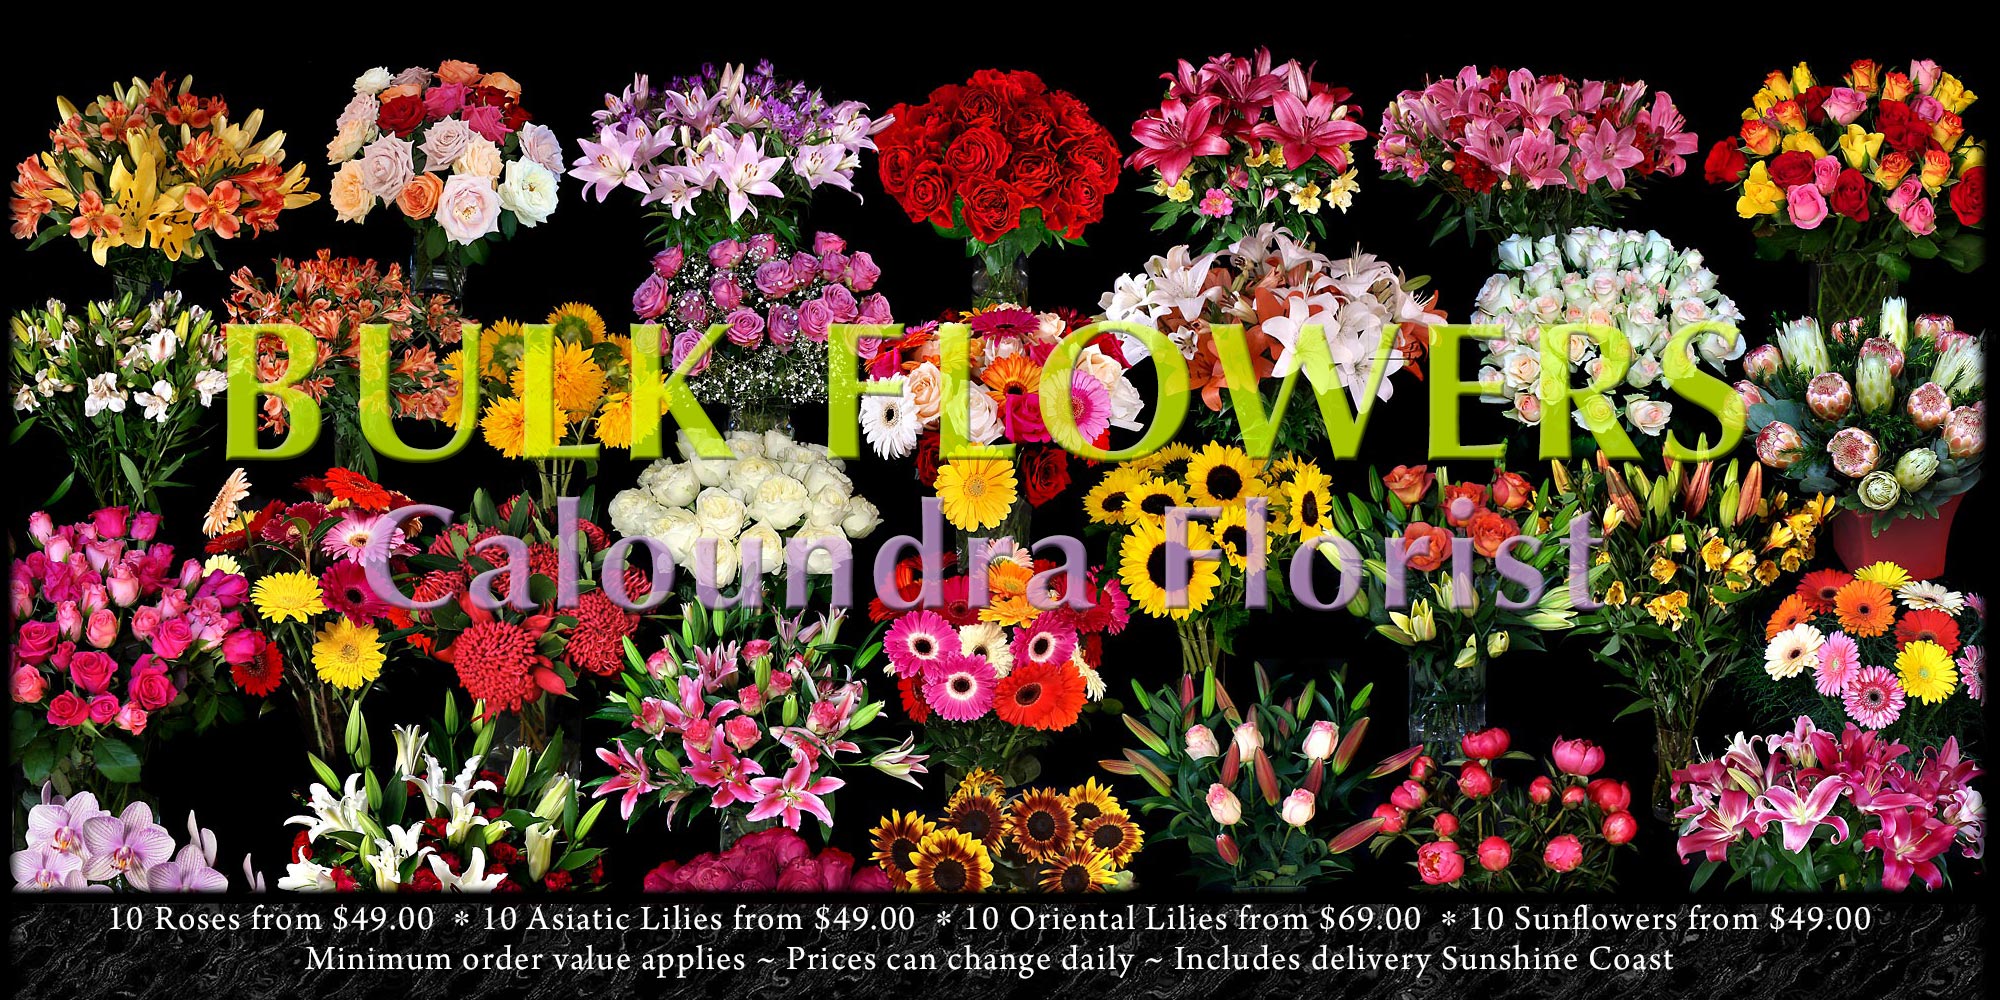 CALOUNDRA FLORIST BULK FLOWERS